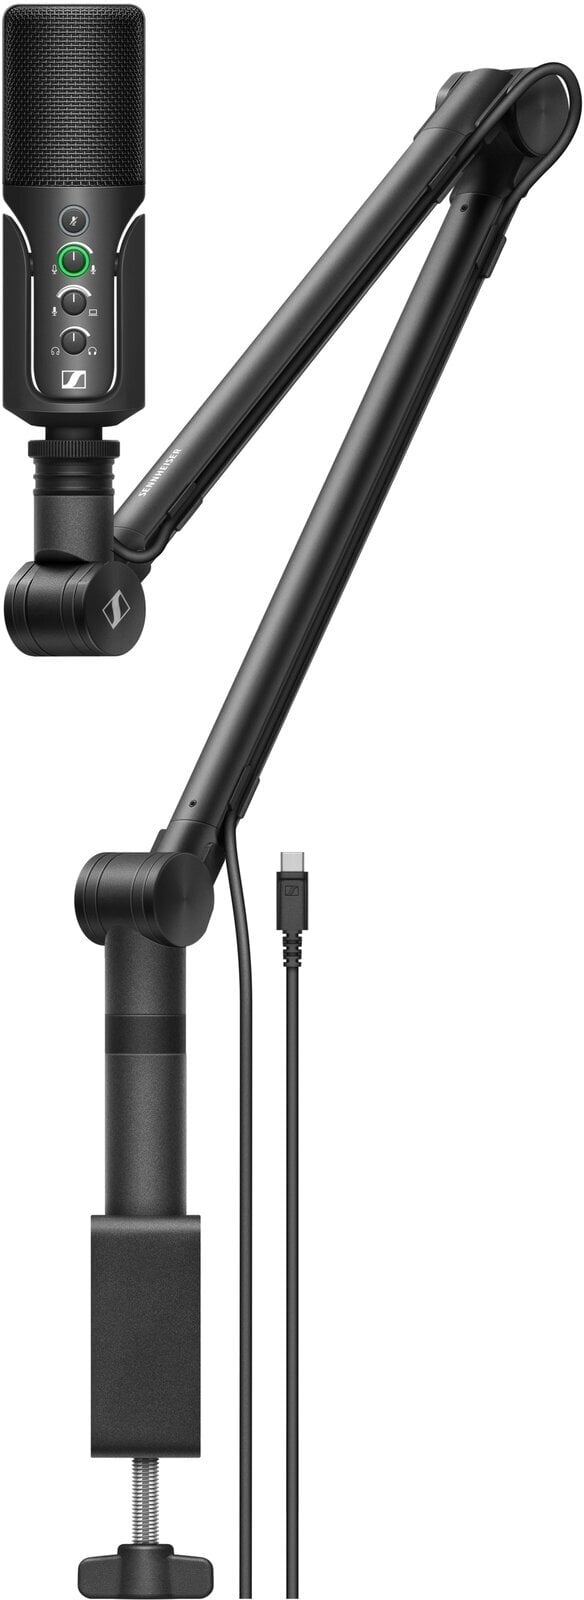 USB Microphone Sennheiser Profile Streaming Set